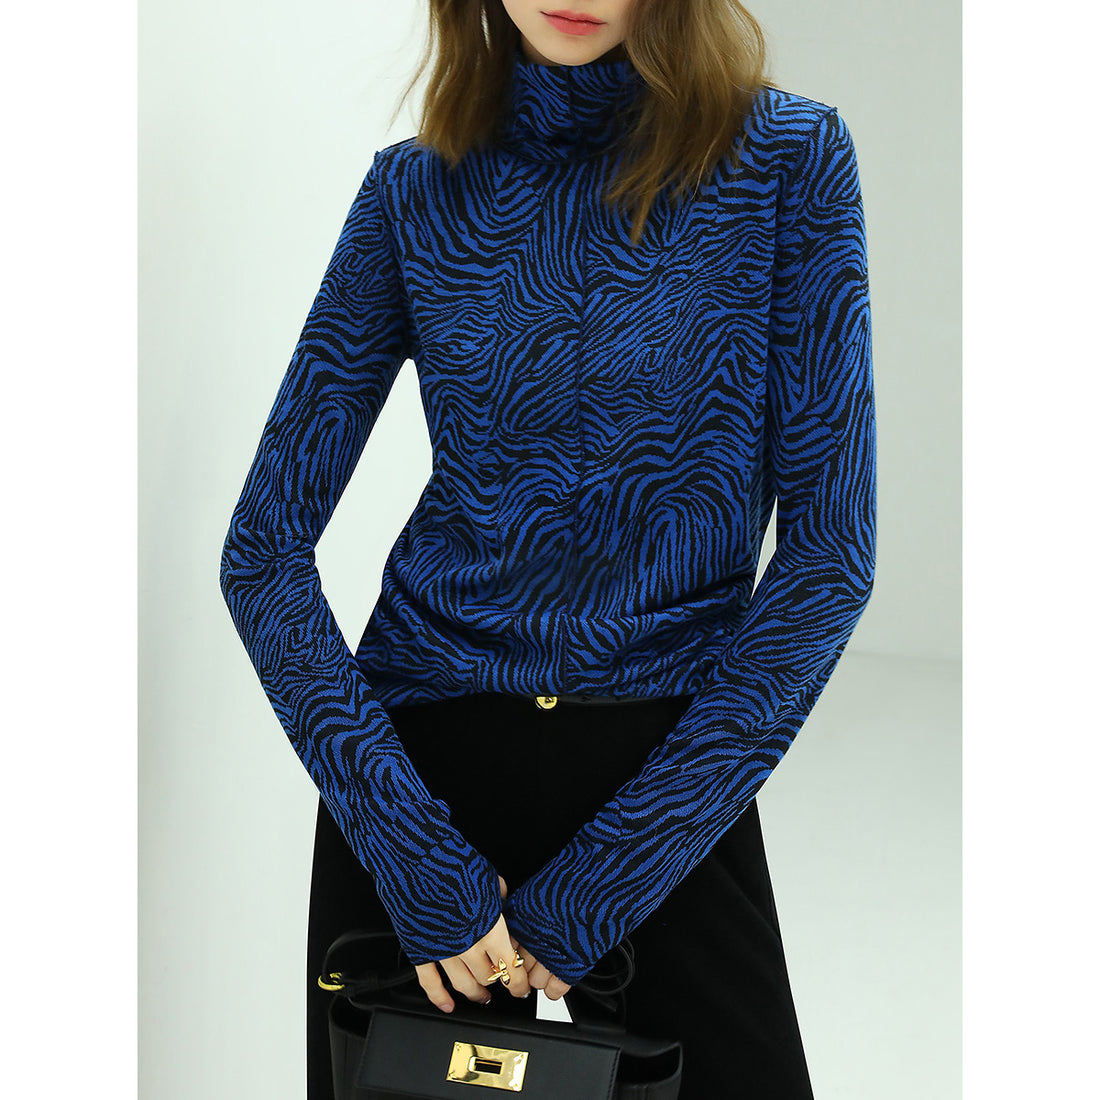 high-neck-zebra-patterned-blue-jacquard-knit-top_all_blue_2.jpg